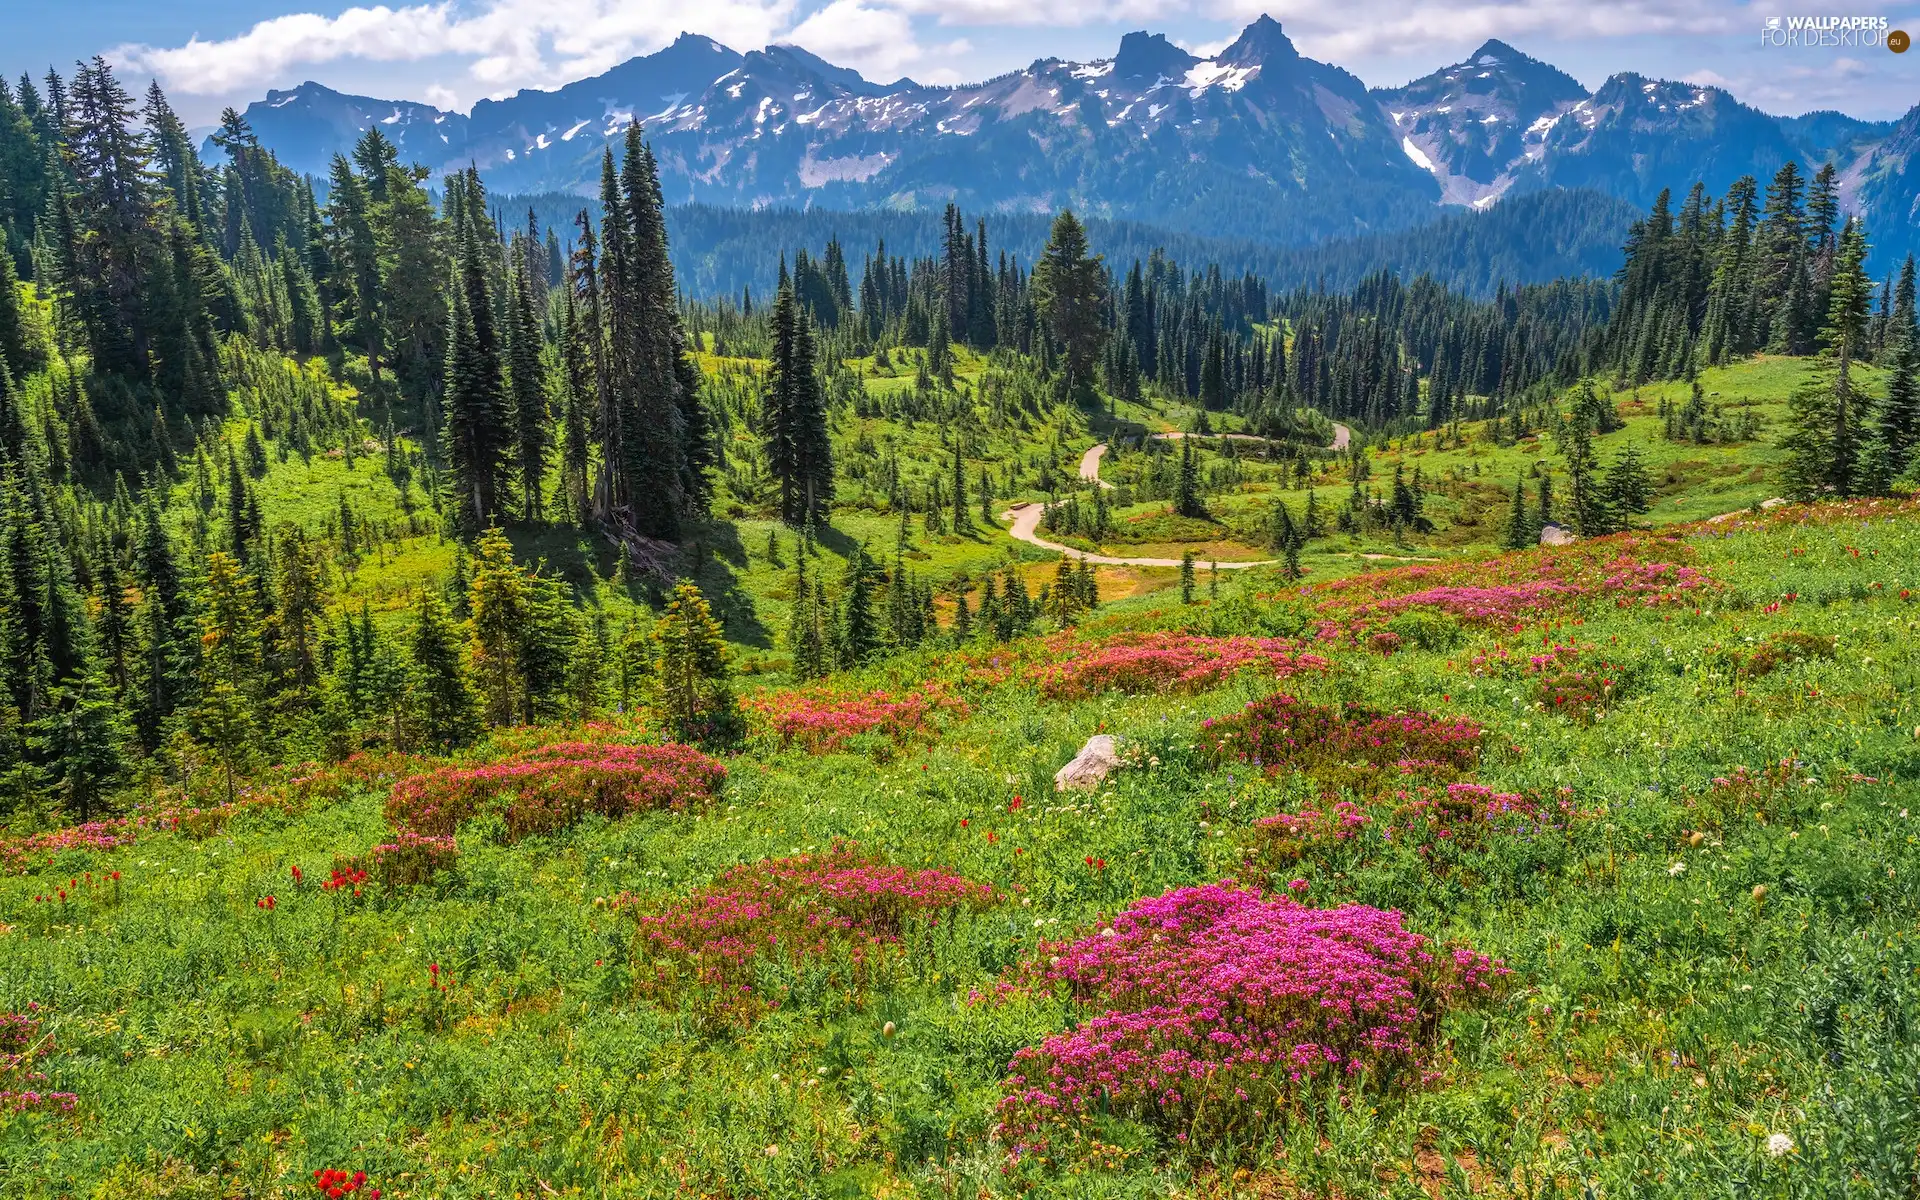 Mountains, Washington State, Flowers, Mount Rainier National Park, The United States, Meadow, Way